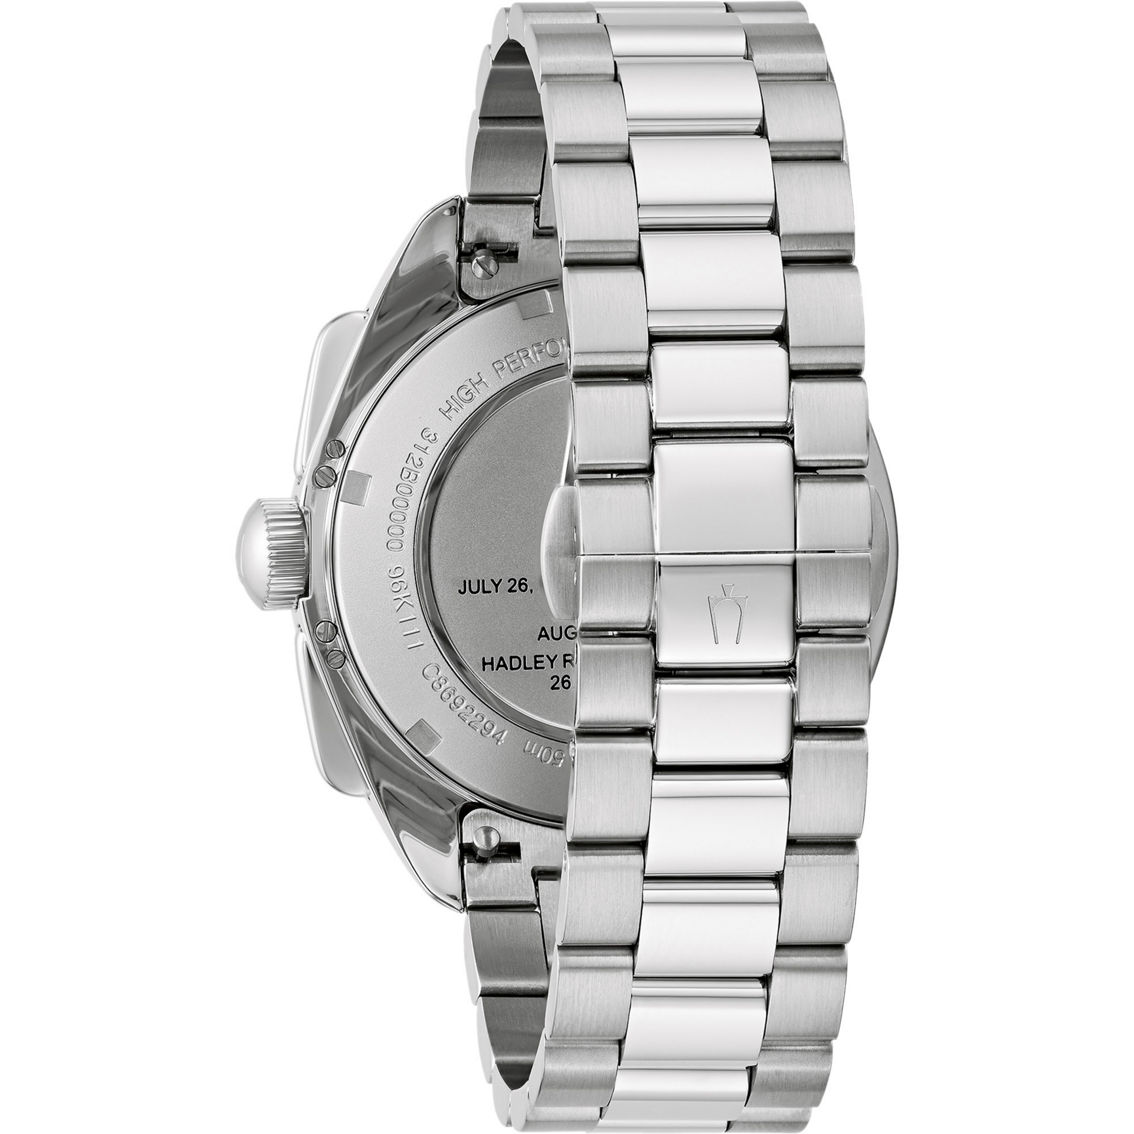 Bulova Lunar Pilot Stainless Steel Bracelet Watch 96K111 - Image 2 of 4